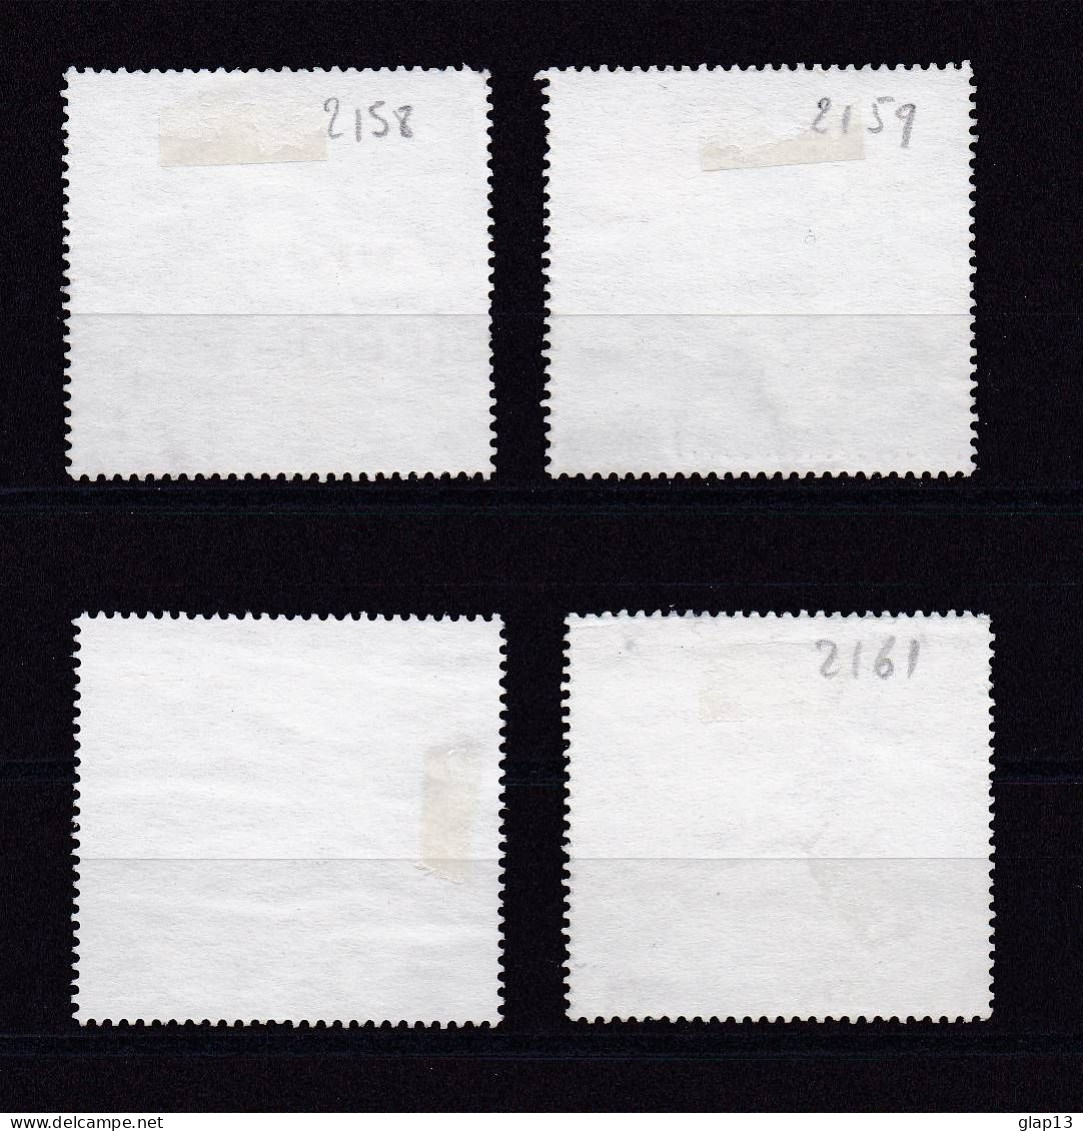 GRANDE-BRETAGNE 2000 TIMBRE N°2158/61 OBLITERE NOUVEAU MILLENAIRE - Used Stamps